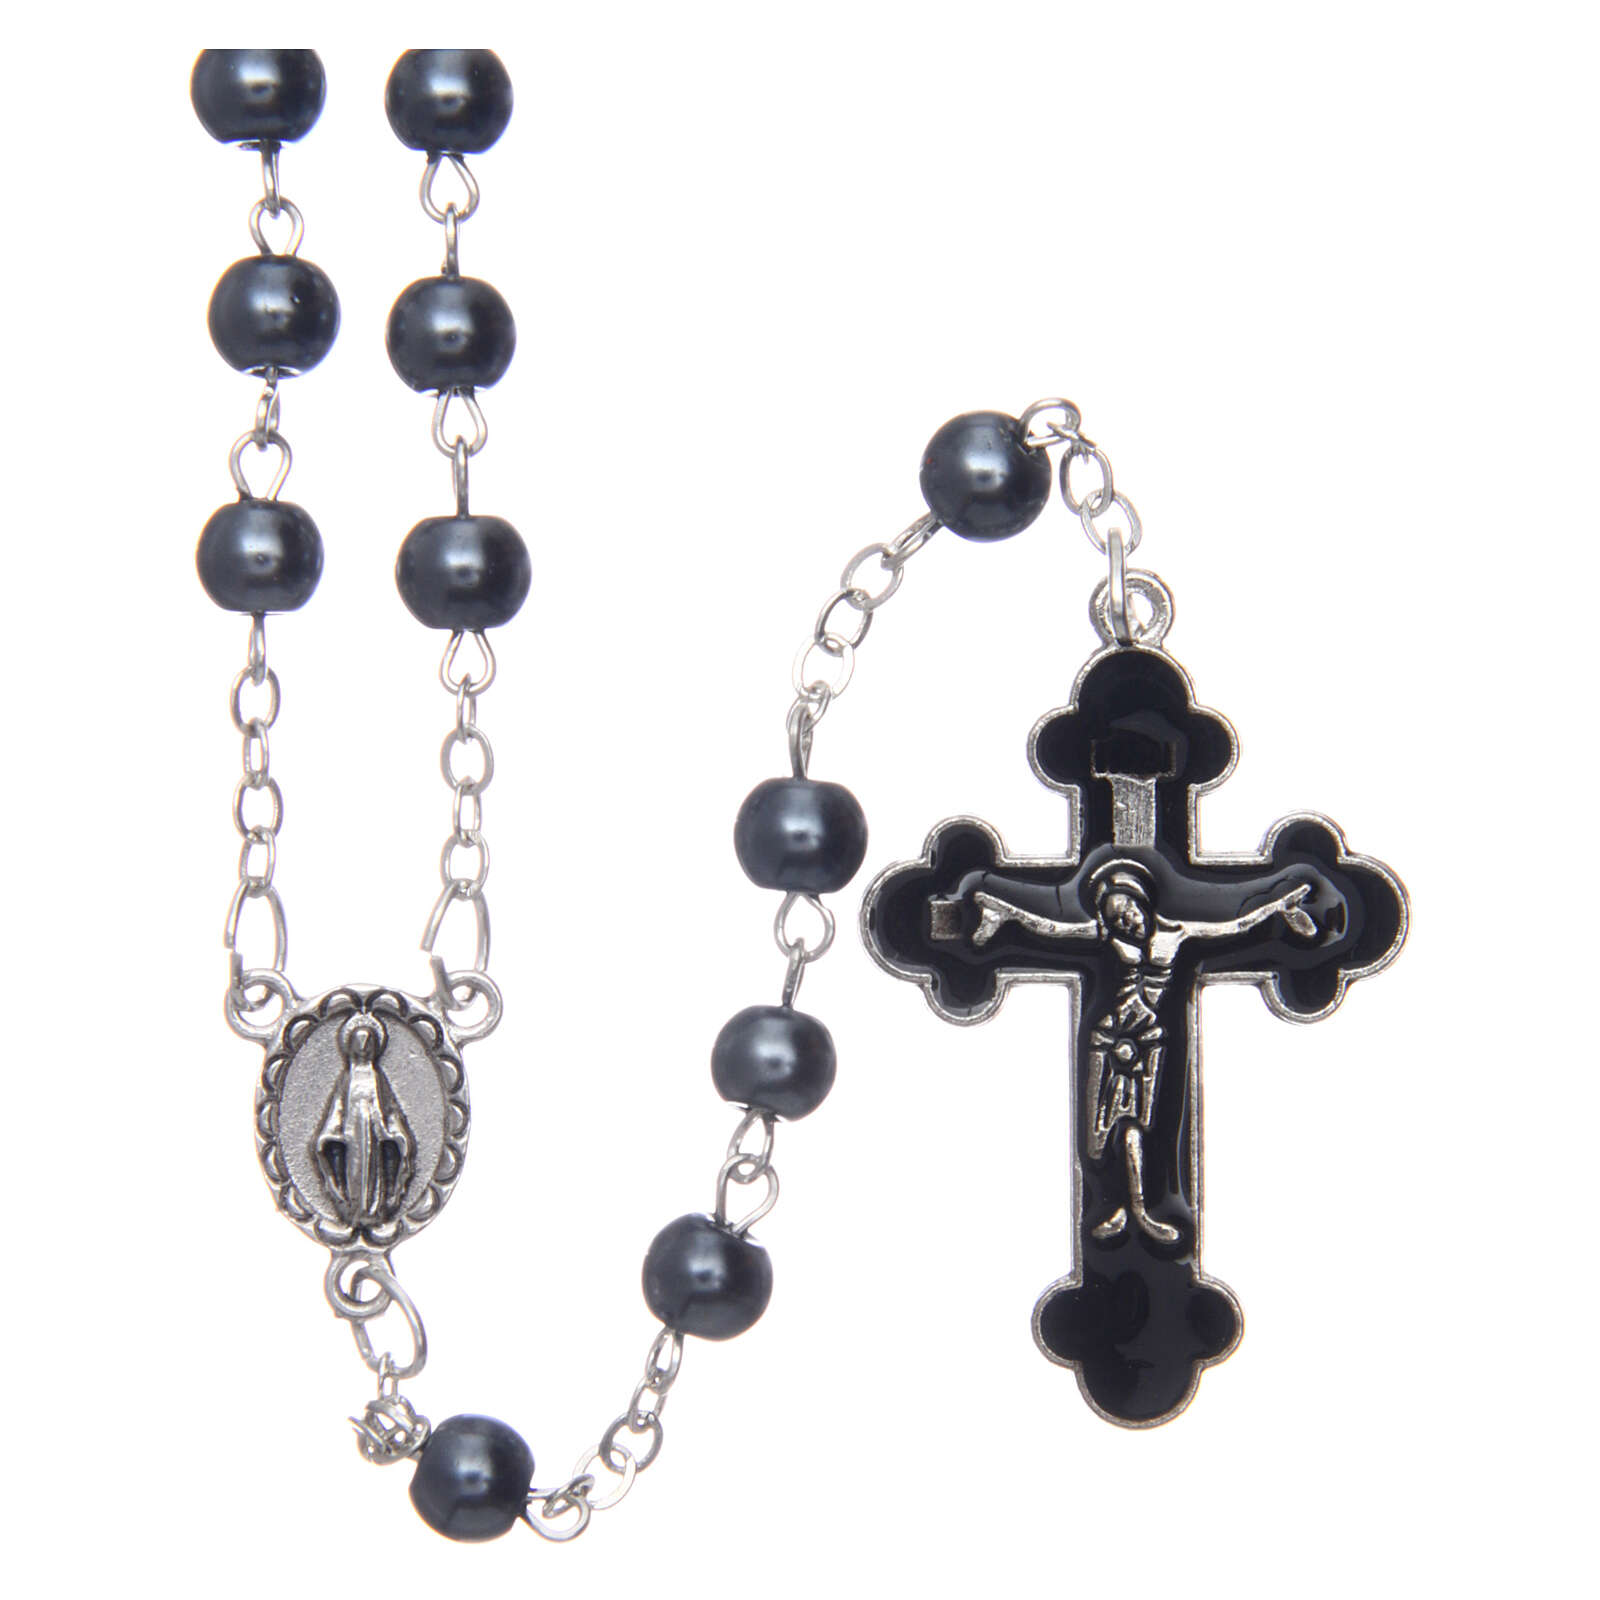 Imitation pearl rosary round grey beads 5 mm | online sales on HOLYART.com